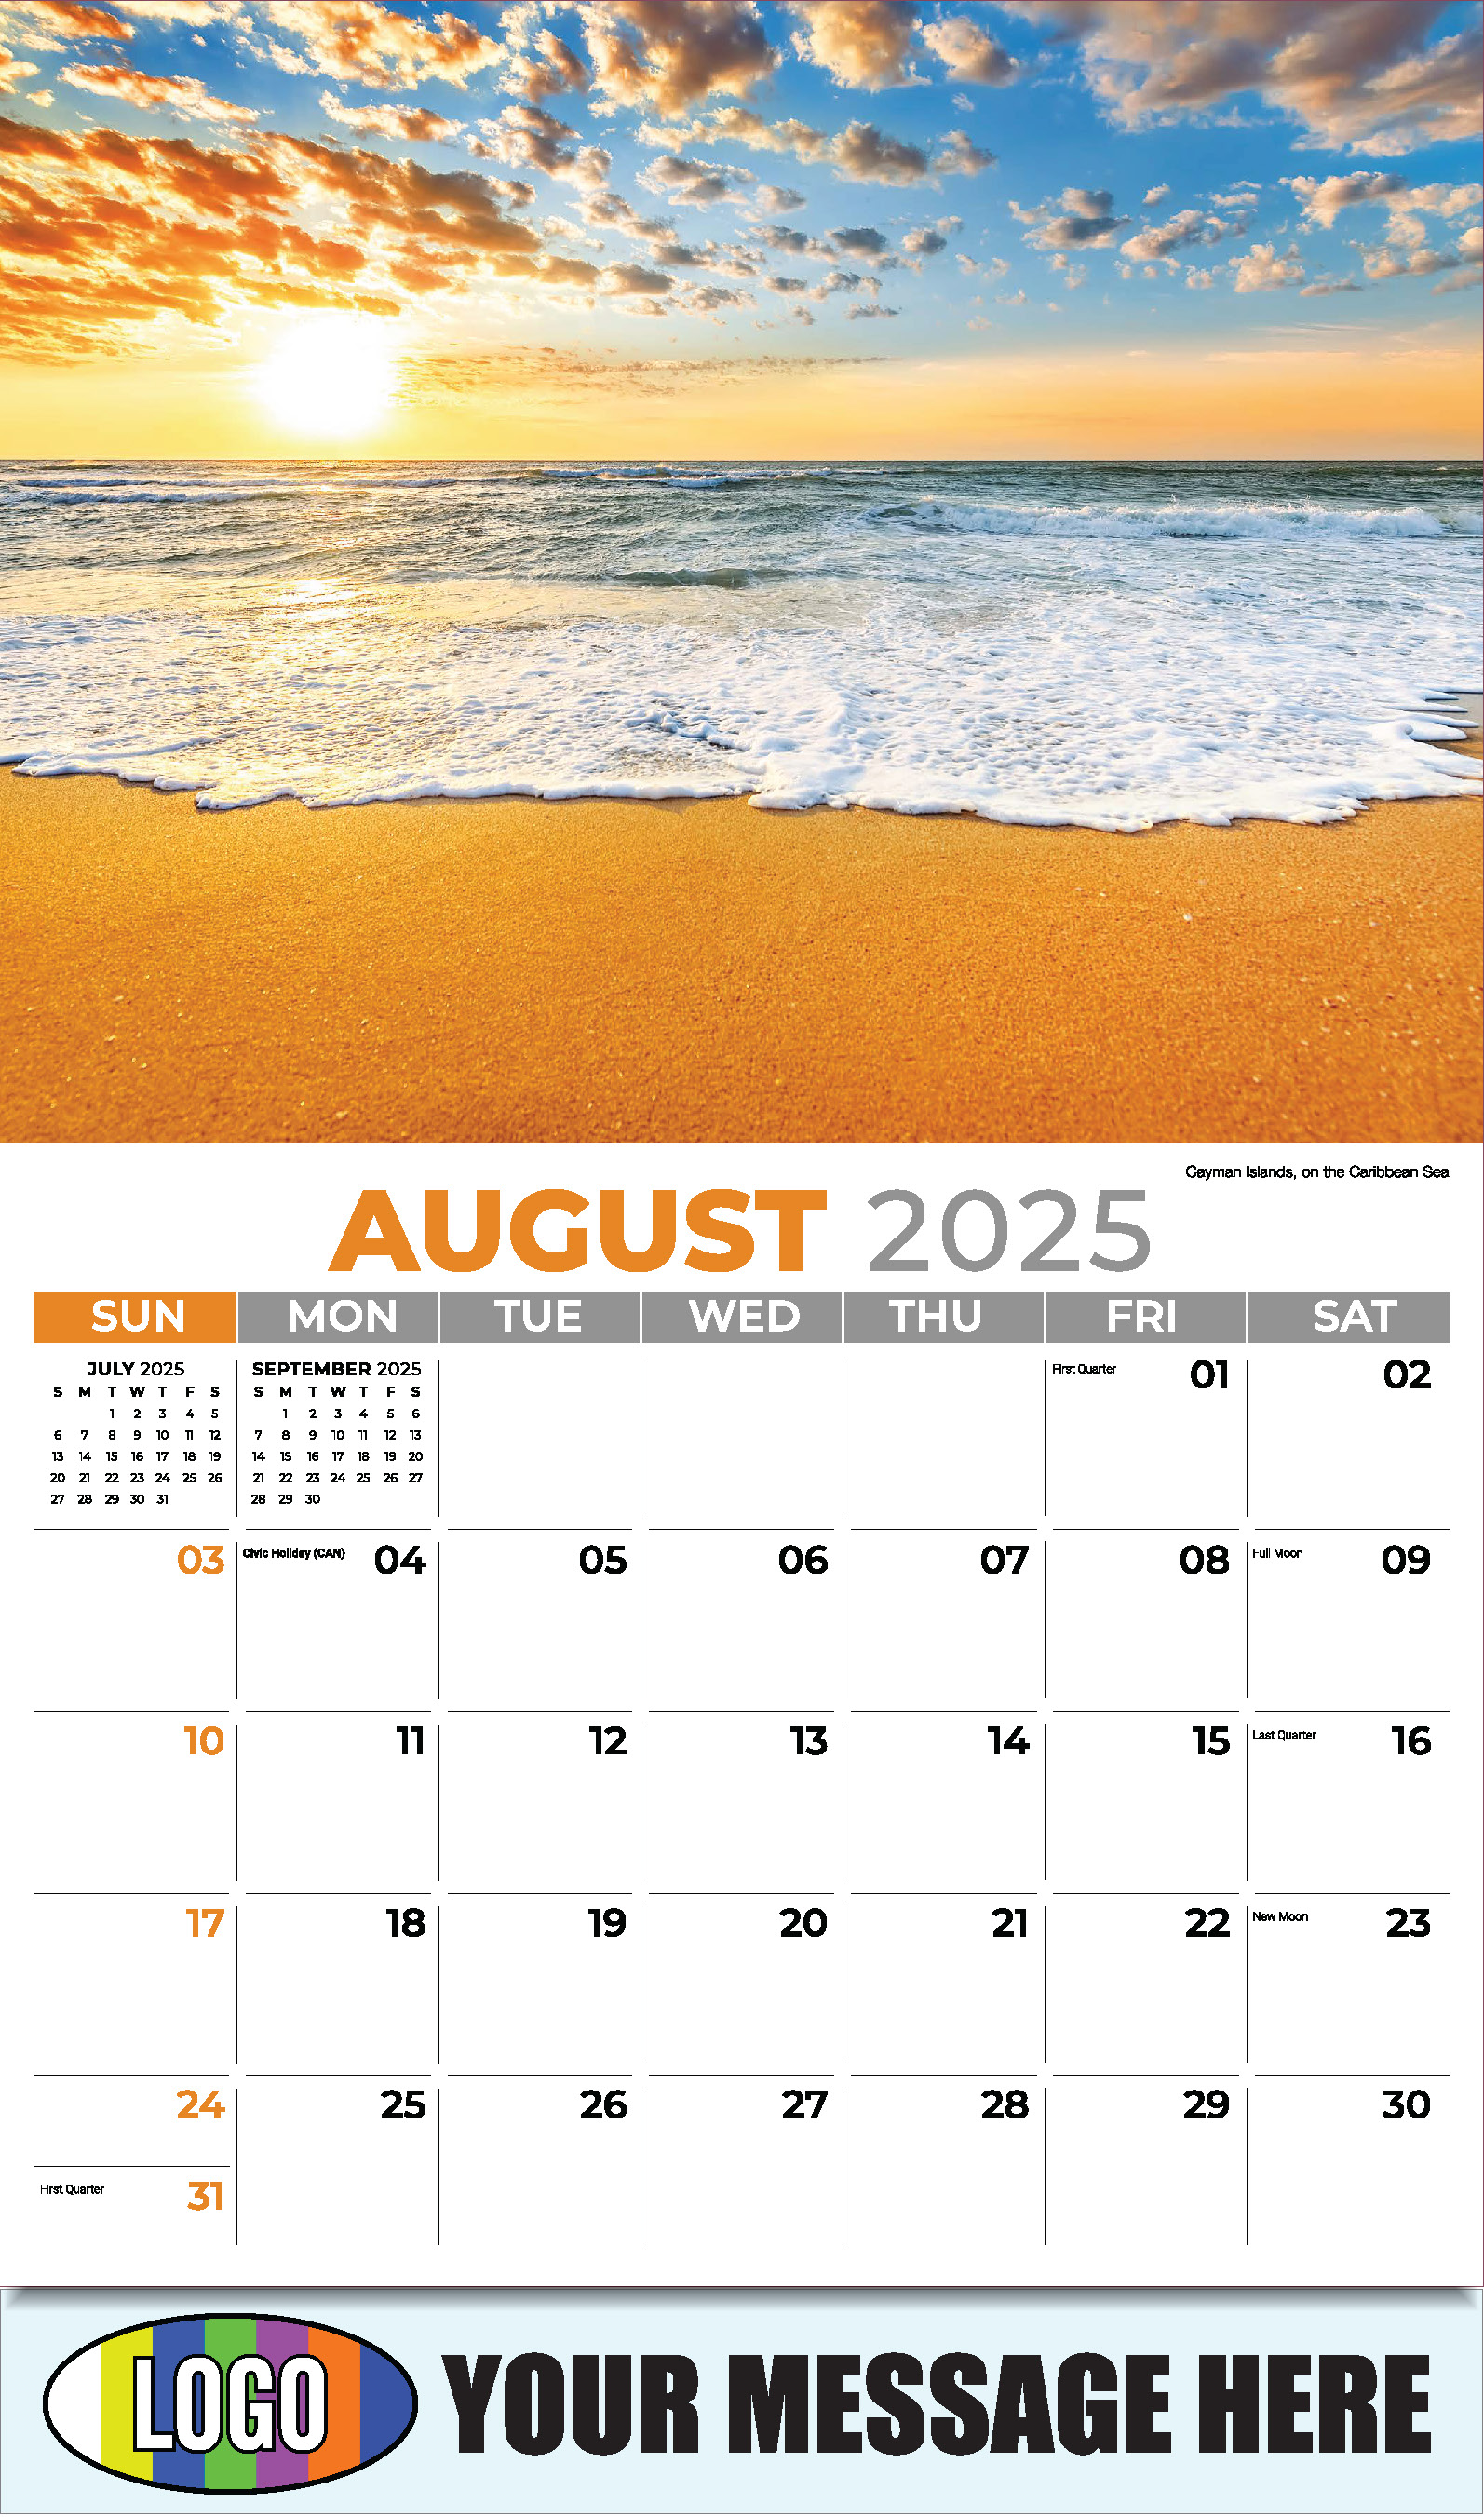 Sun, Sand and Surf 2025 Business Advertsing Wall Calendar - August